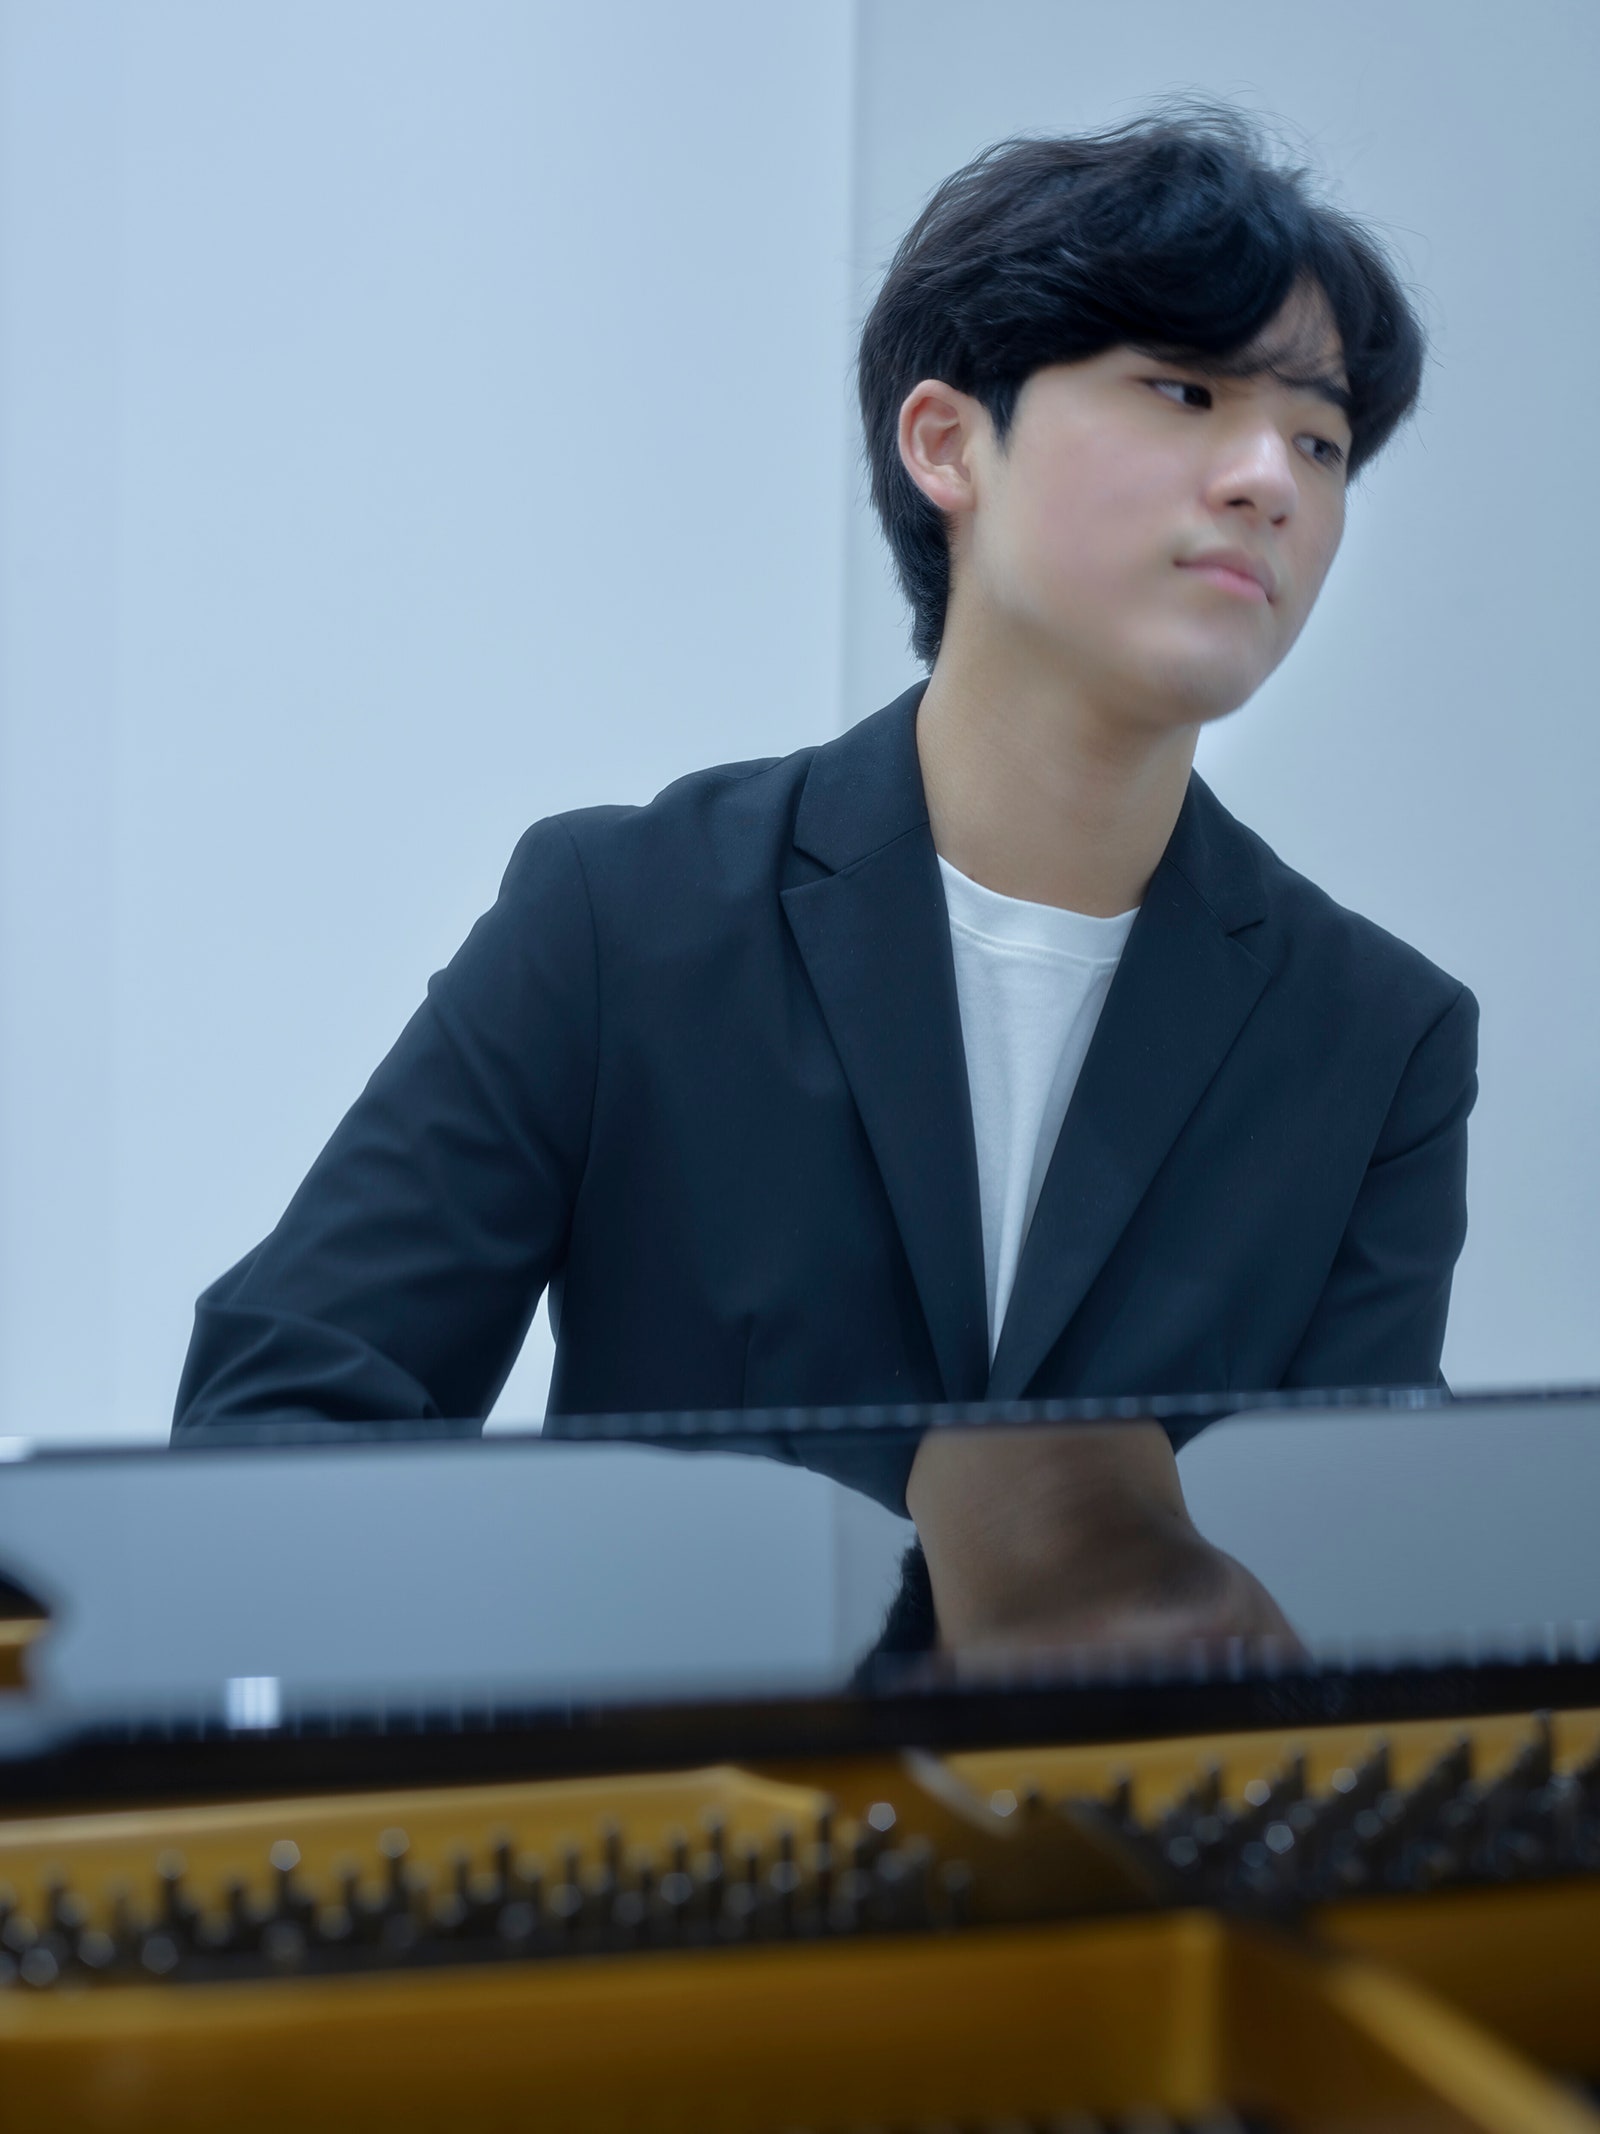 Pianist Yunchan Lim playing a piano wearing a dark blazer and a white tshirt